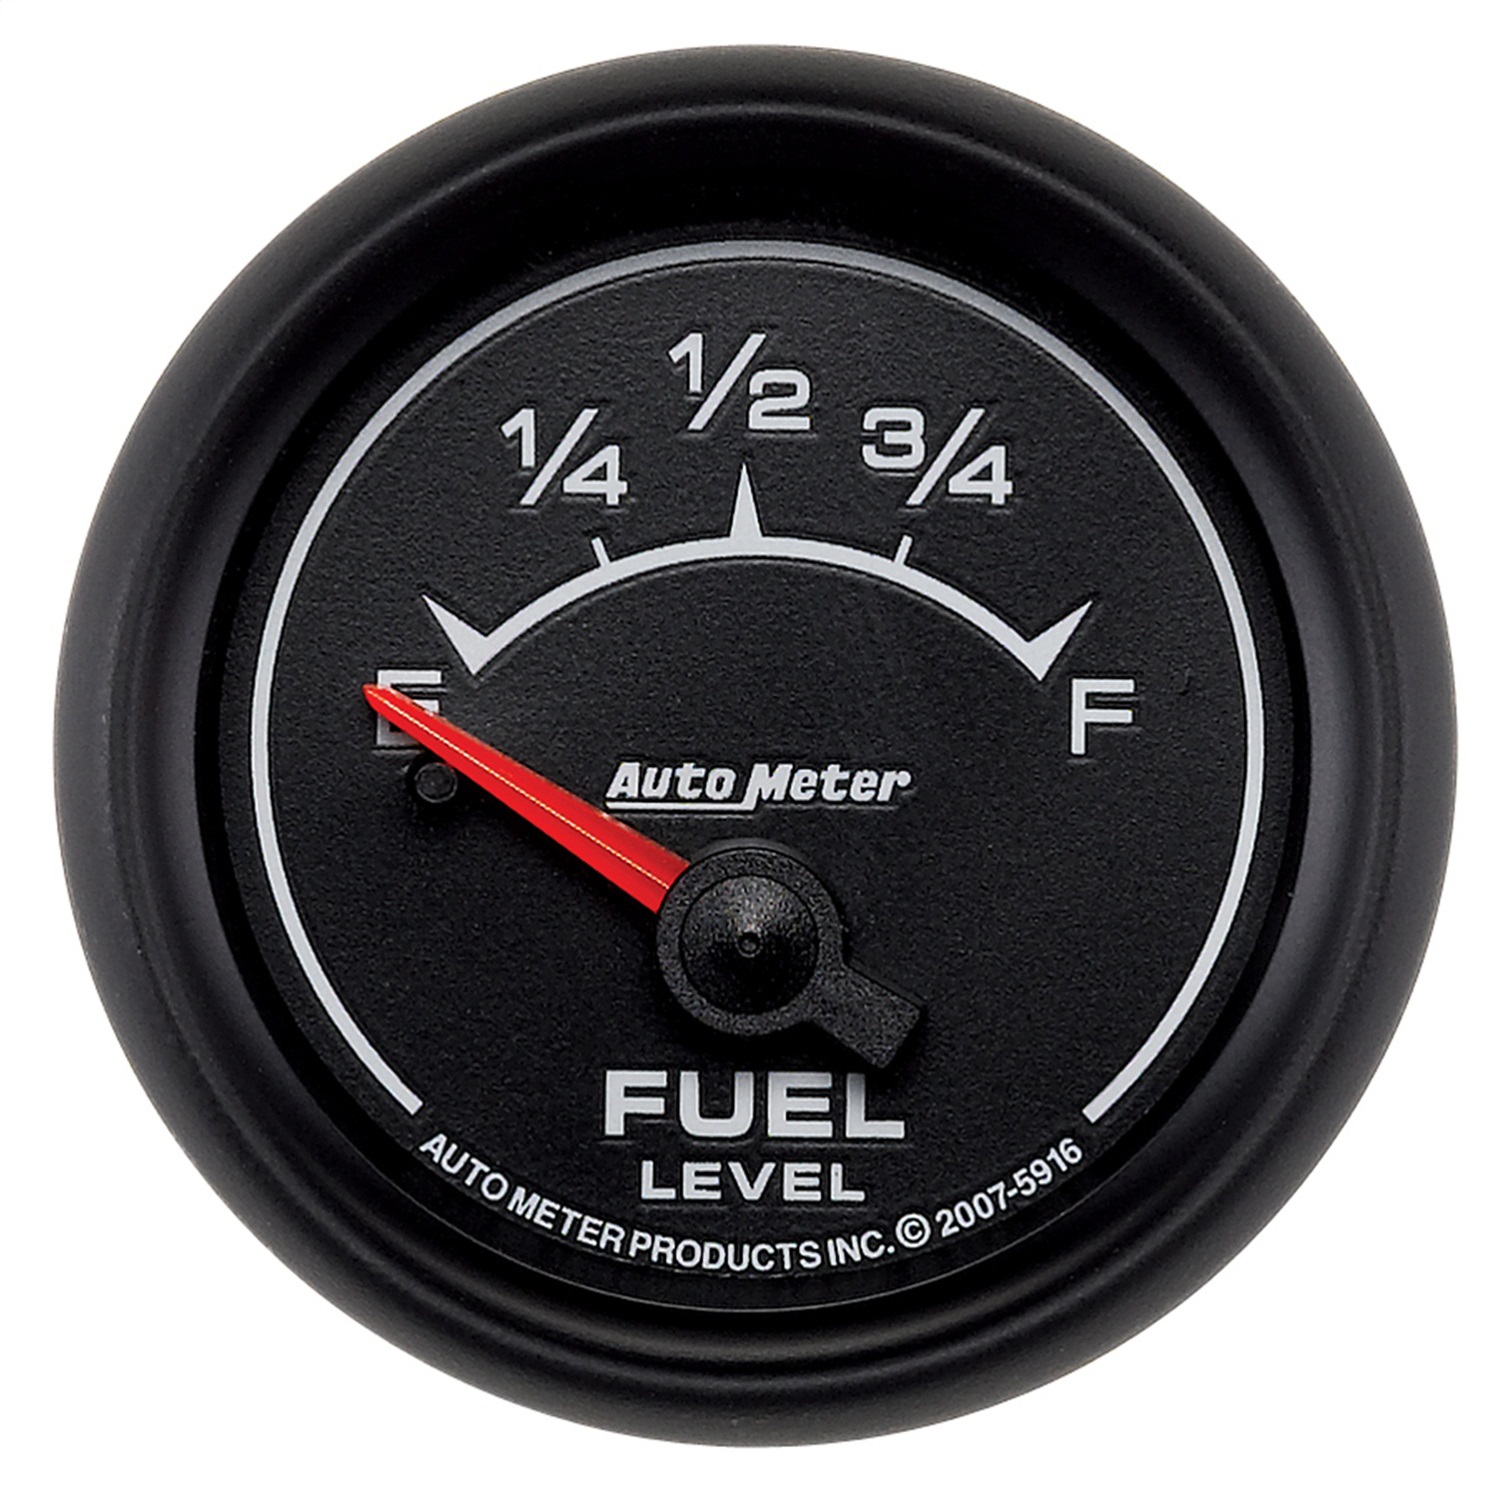 Auto Meter Auto Meter 5916 ES; Electric Fuel Level Gauge